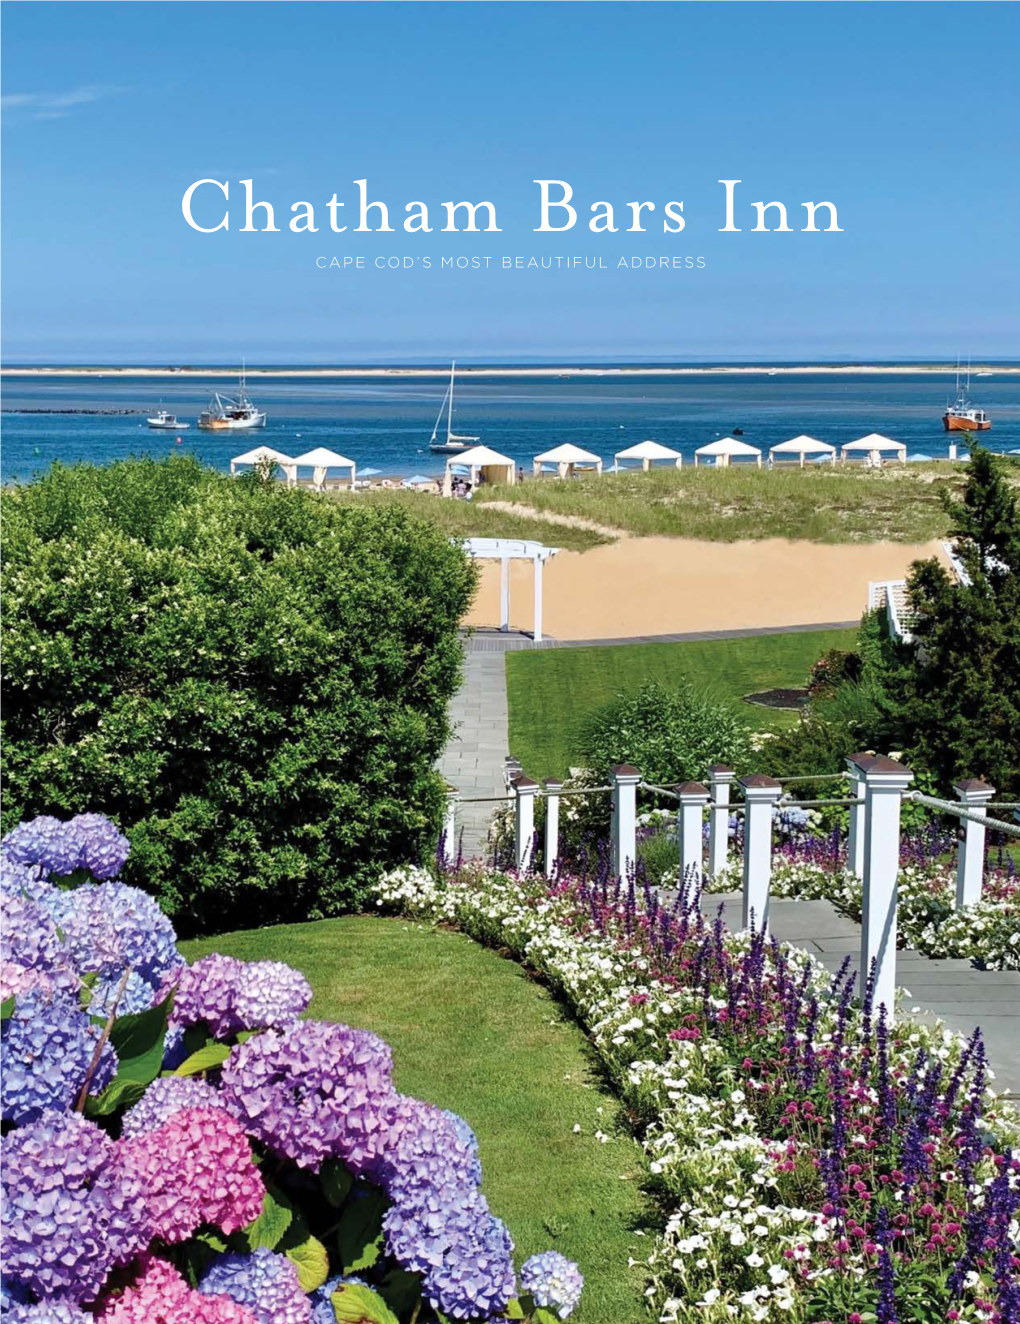 Chatham Bars Inn Magazine